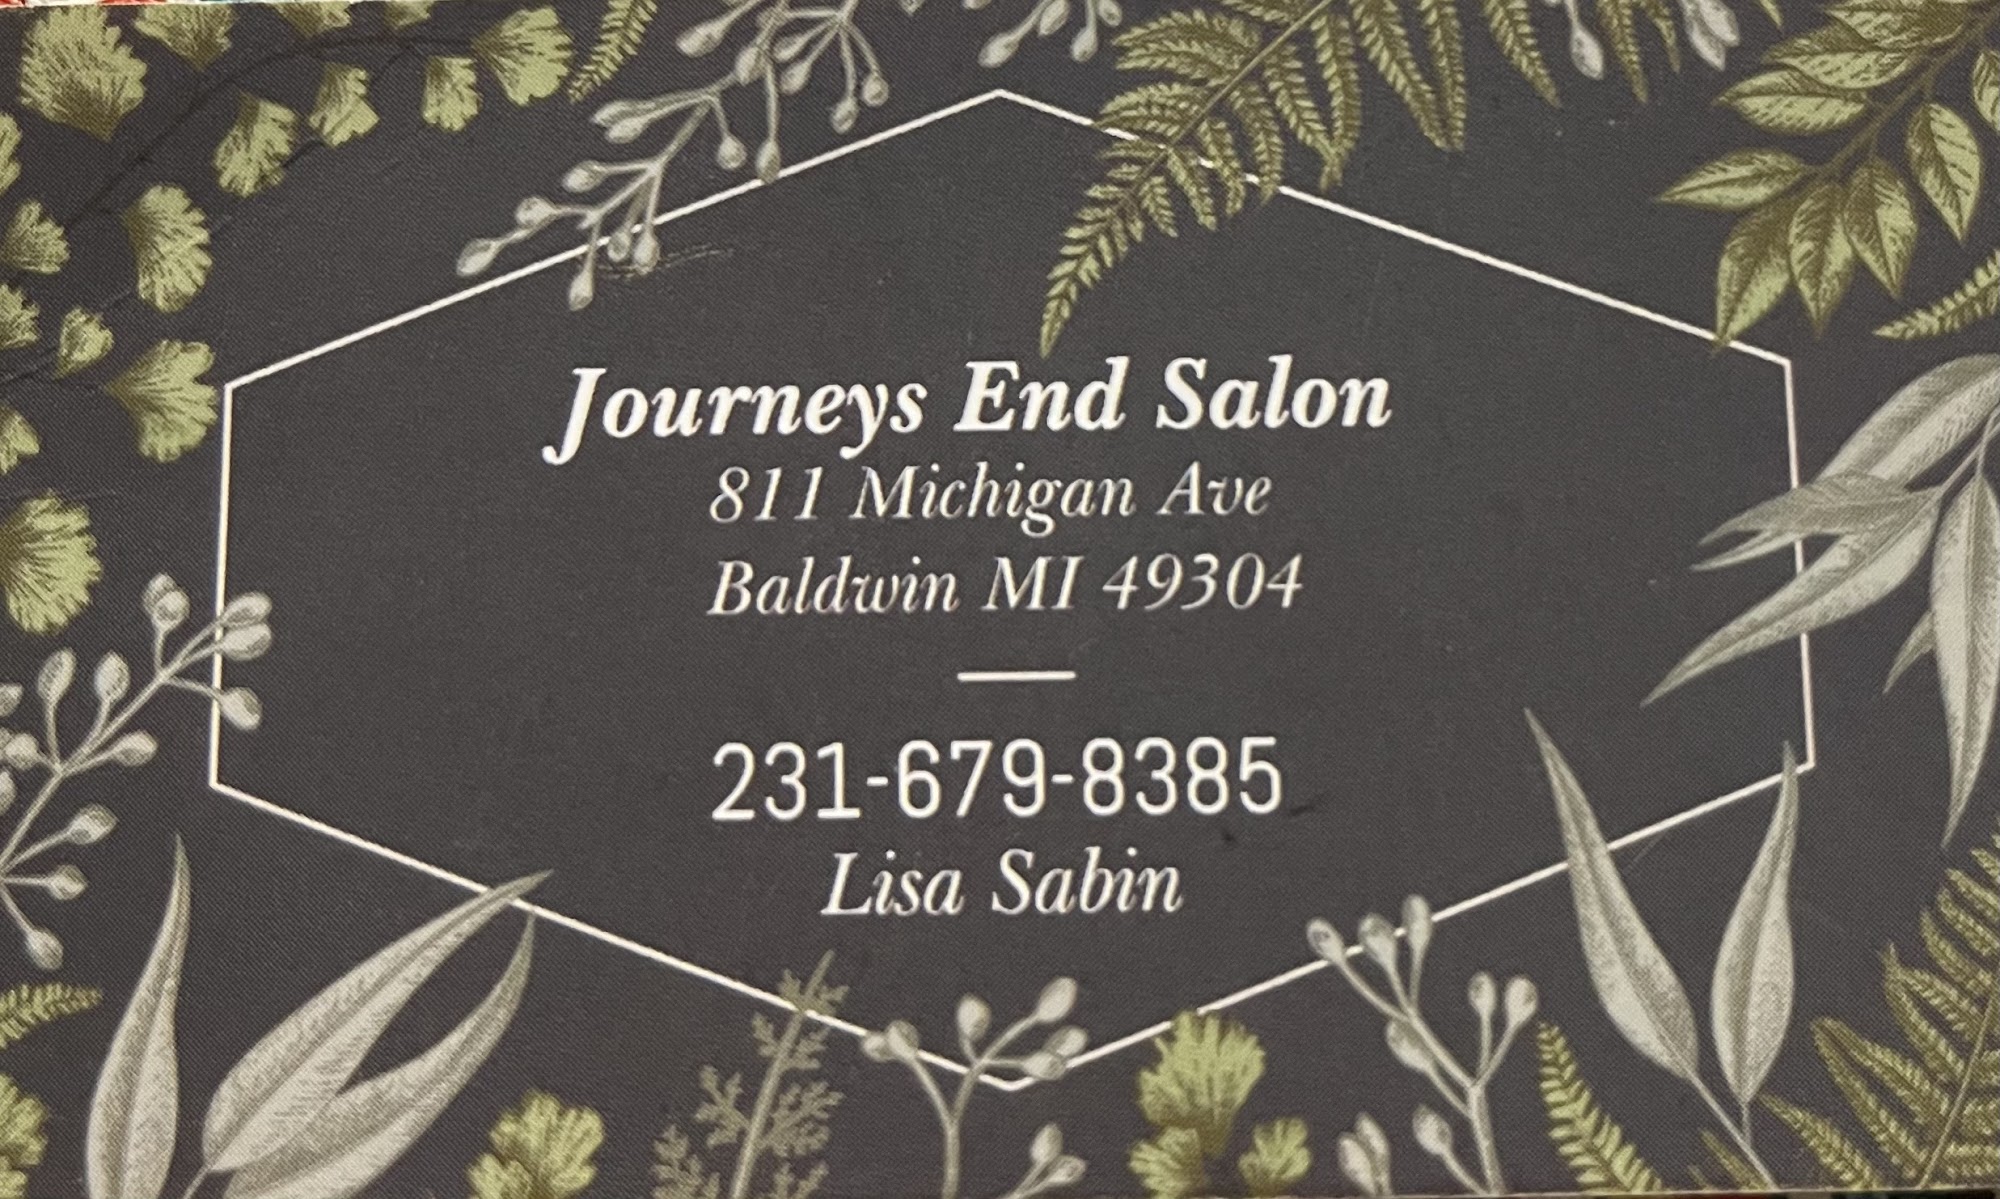 Journeys End Salon 811 Michigan Ave, Baldwin Michigan 49304